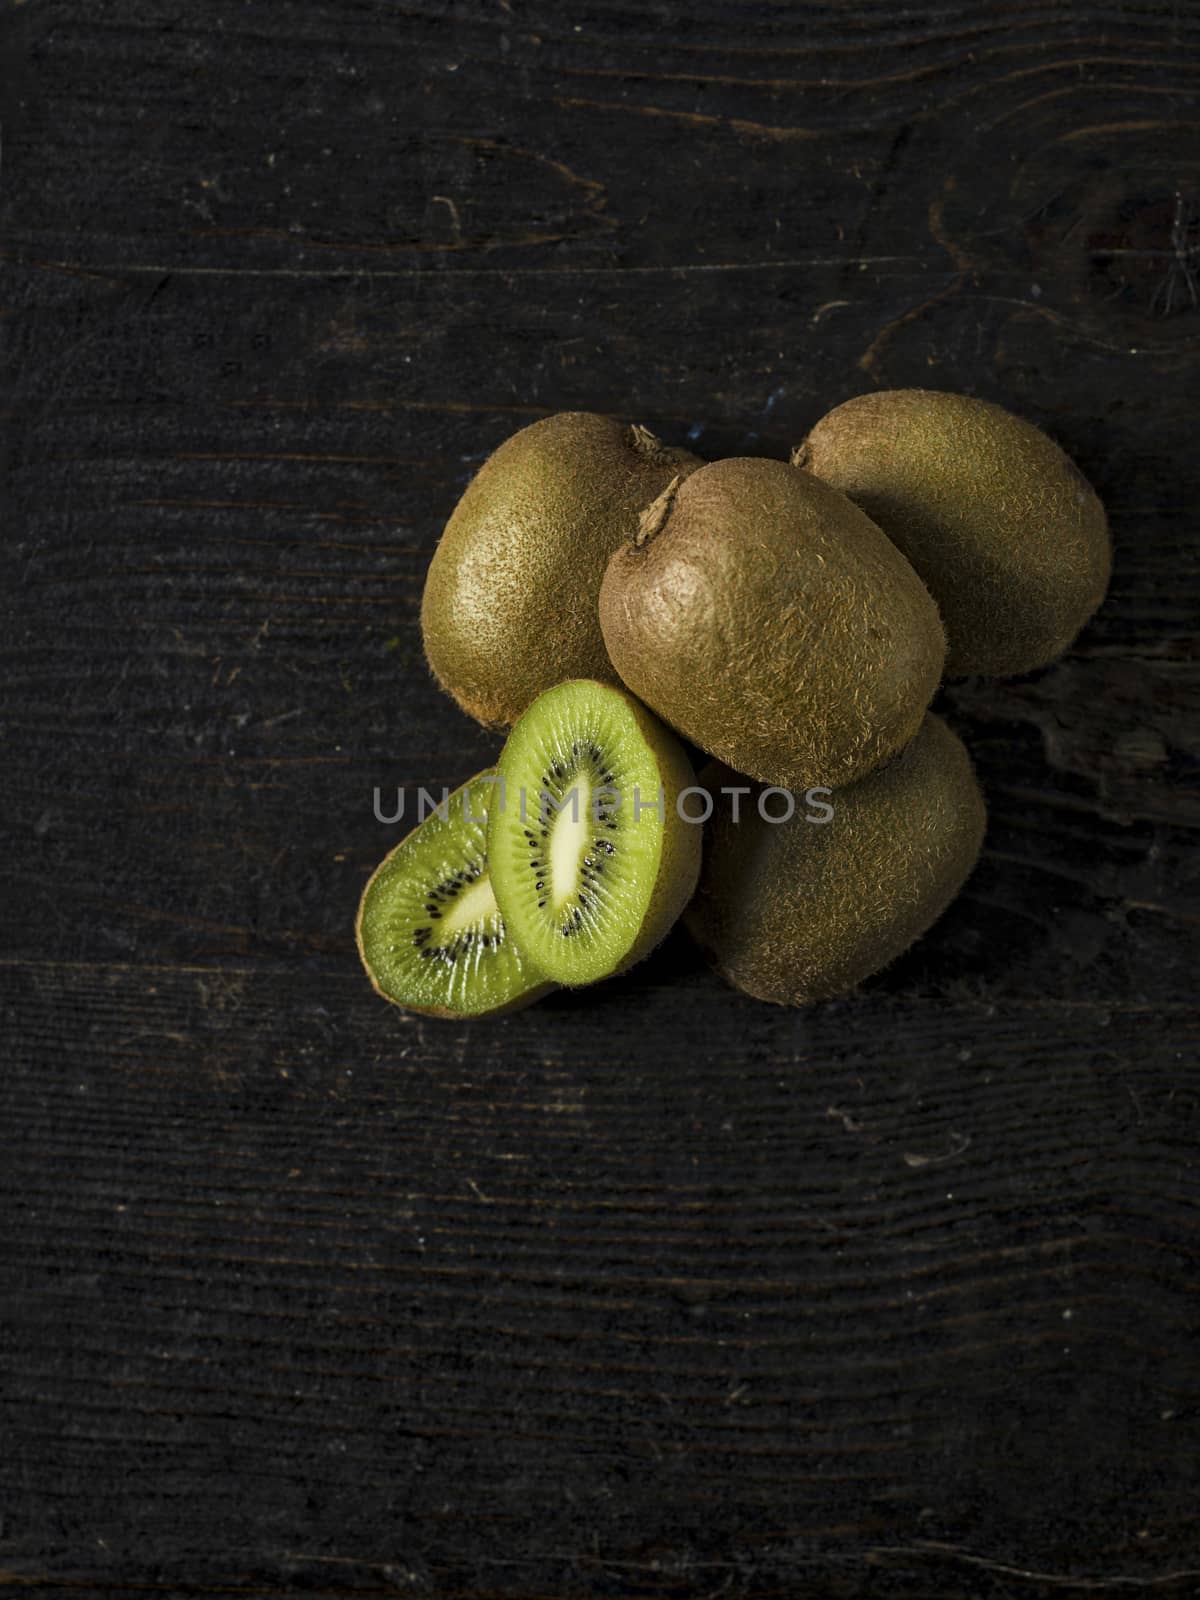 Kiwi Fruit close up by verbano